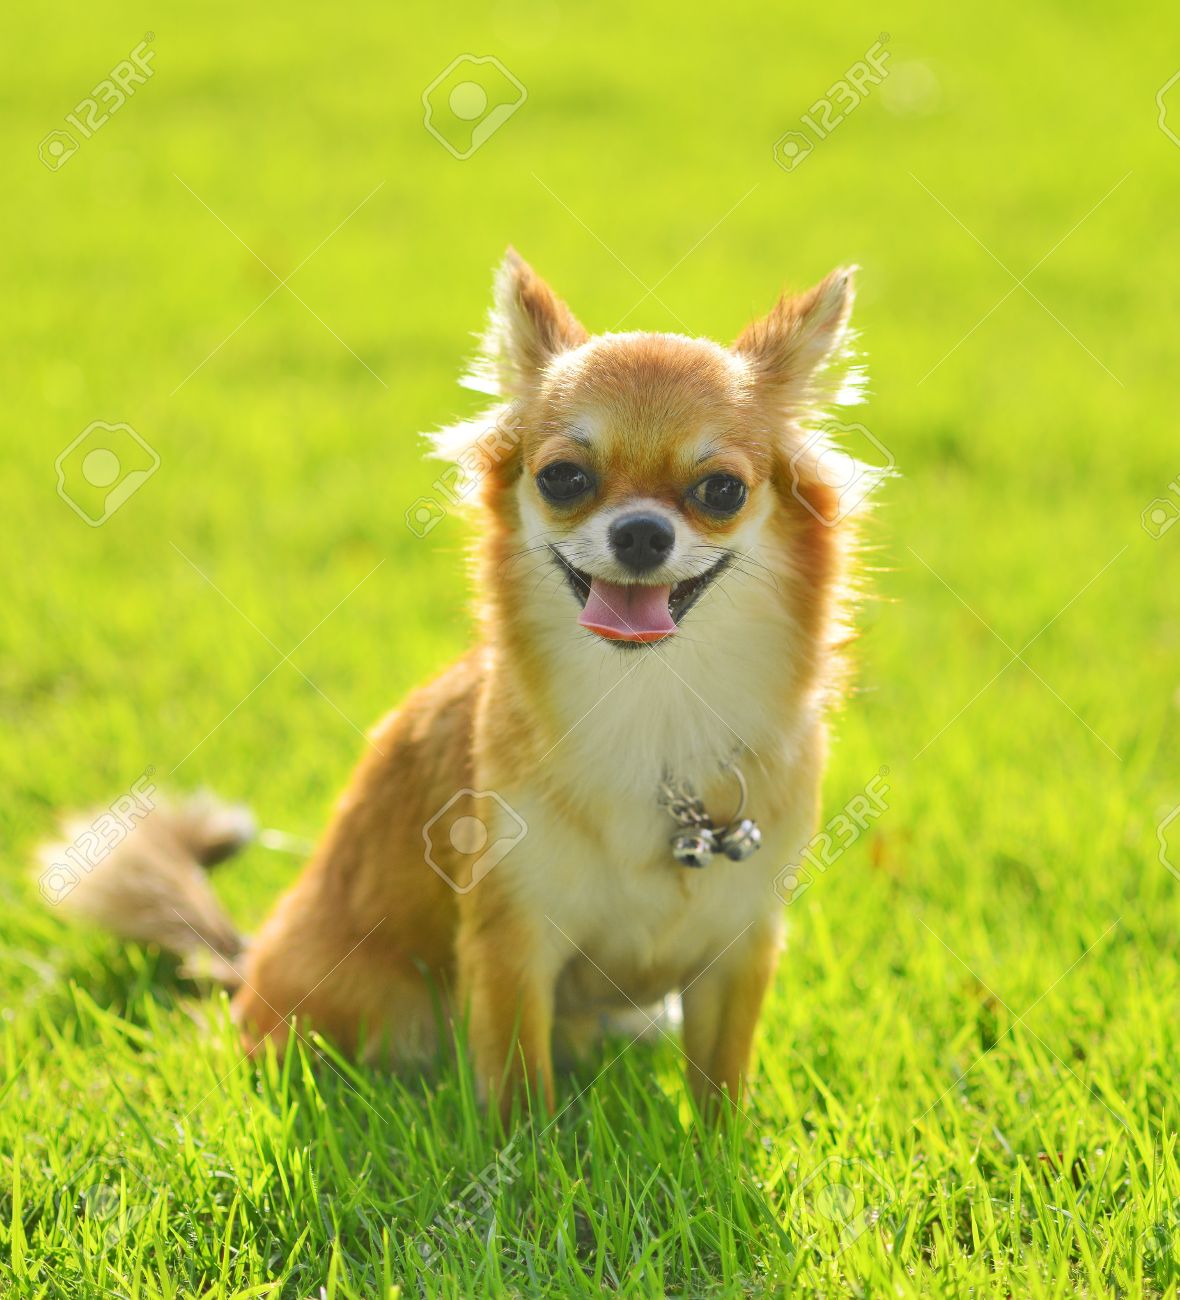 14398745-chiwawa-dog-on-grass-in-park.jpg